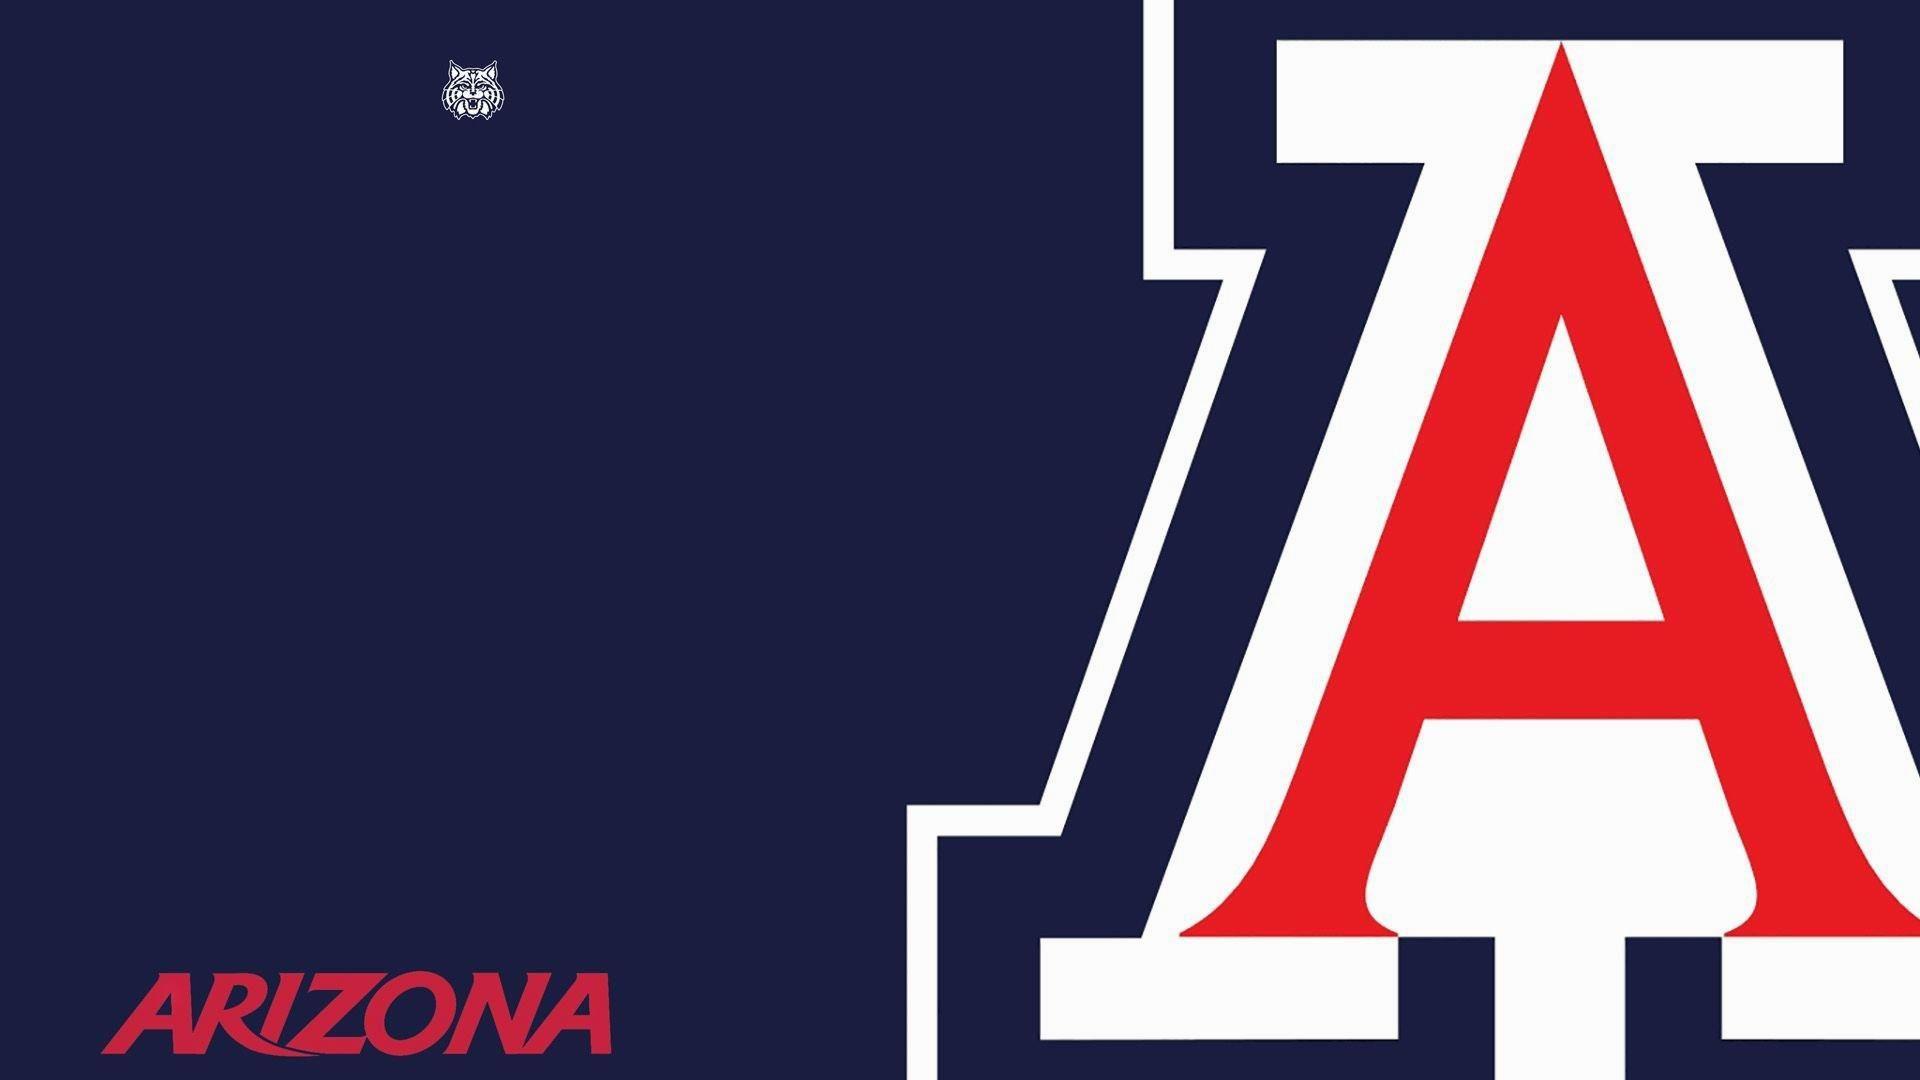 Univeristy of Arizona Logo - University of Arizona Logo Desktop Wallpaper 62473 1920x1080px